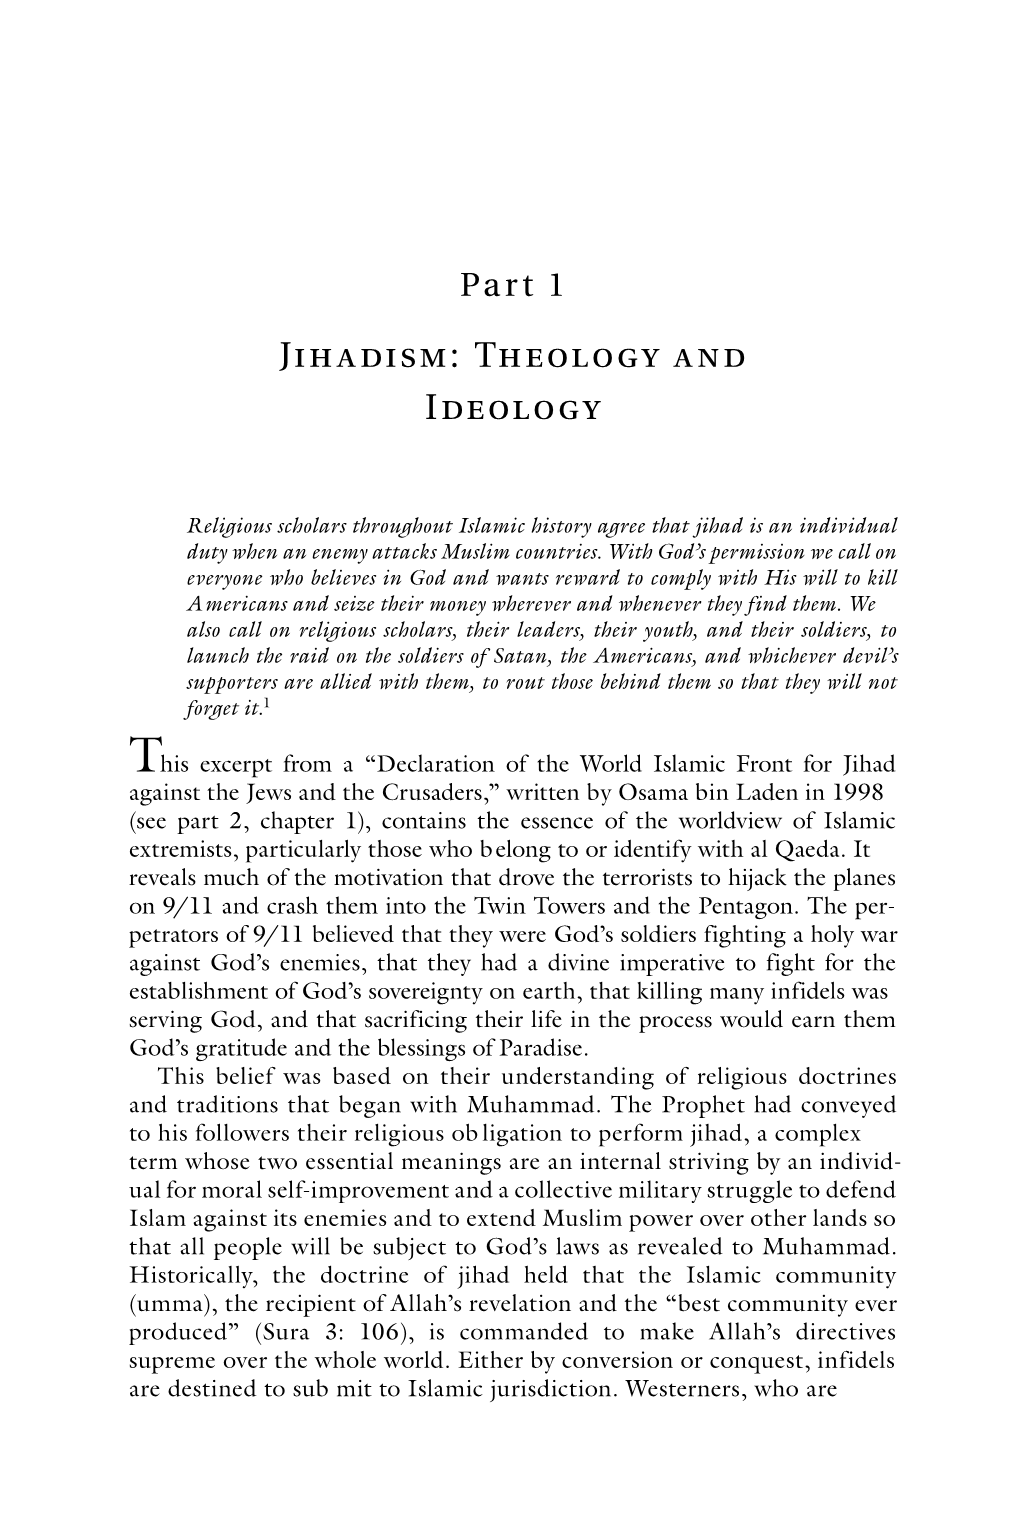 Jihadism: Theology and Ideology